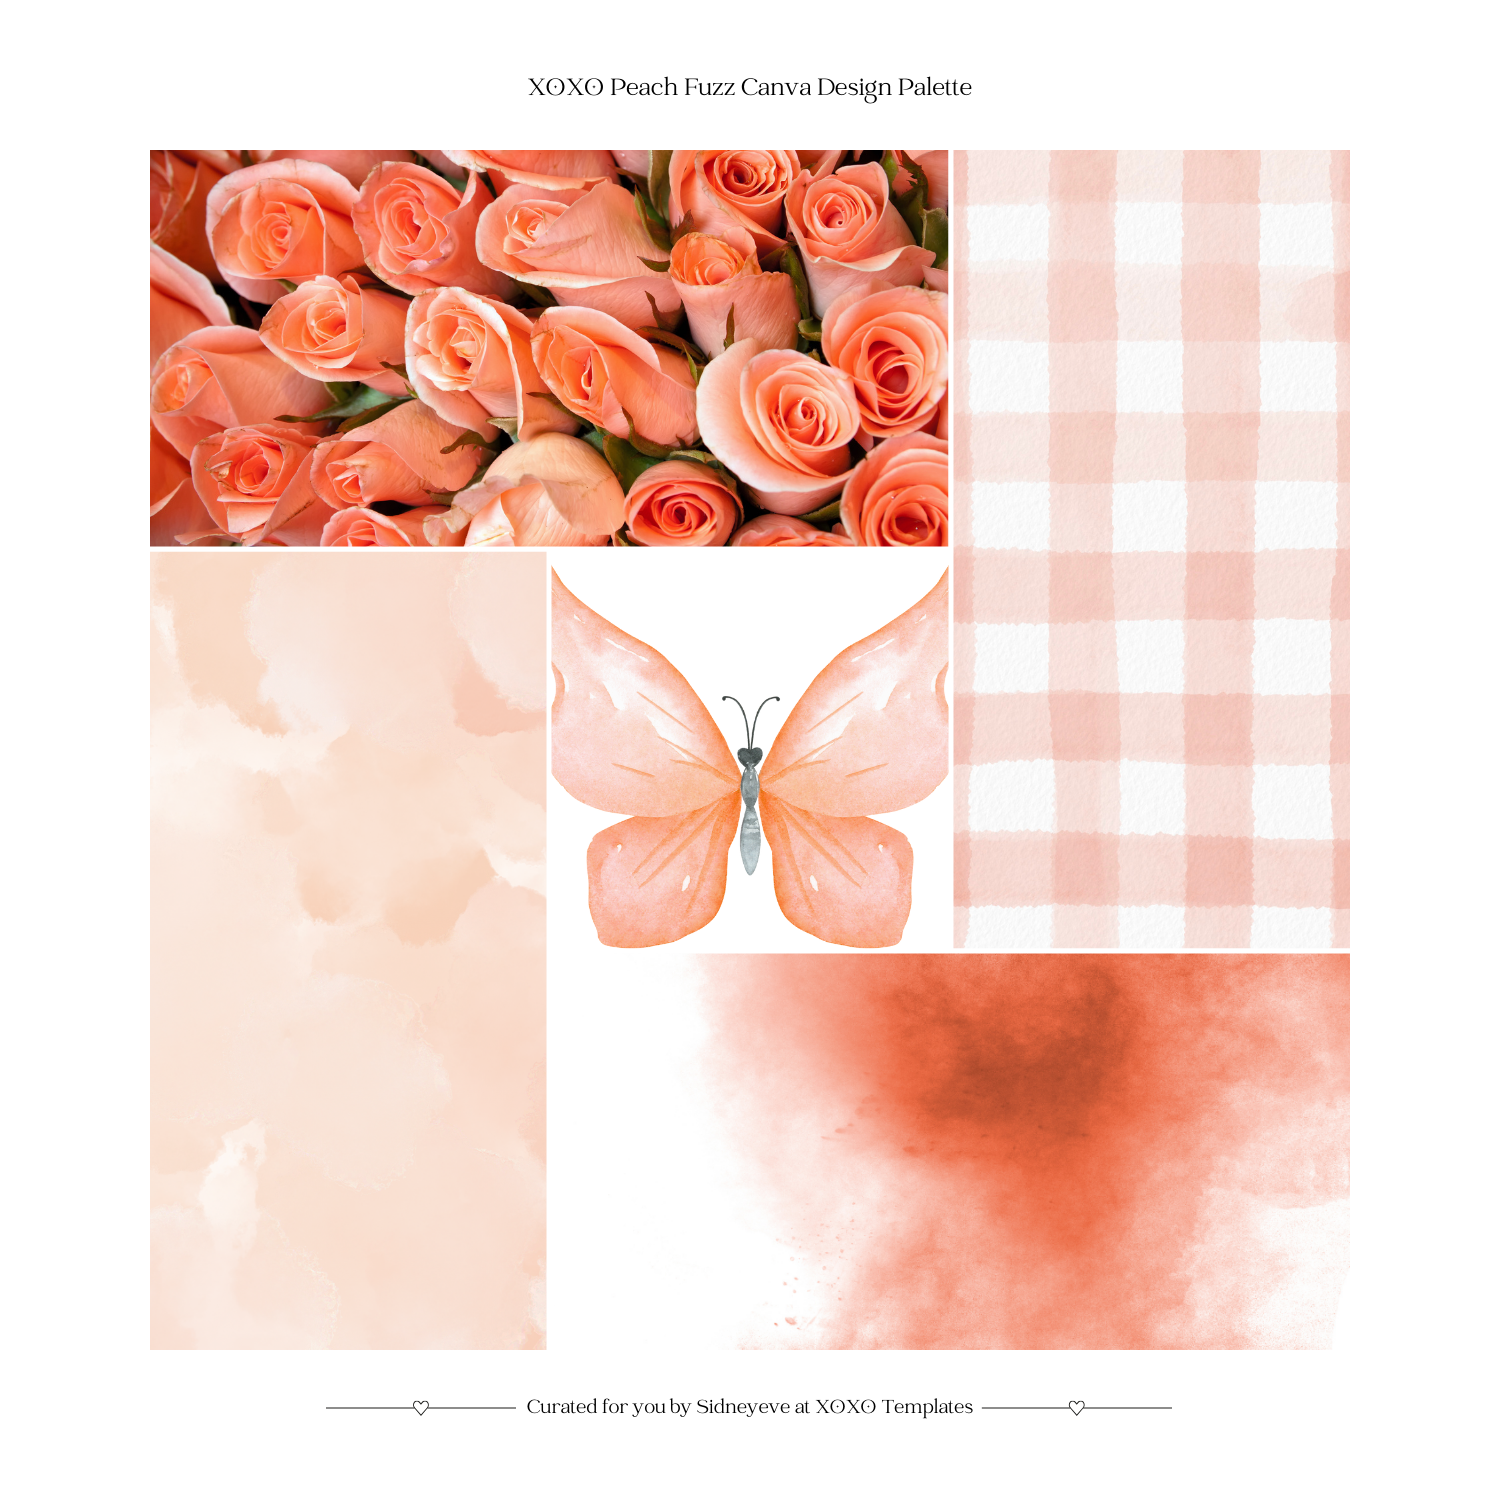 XOXO Peach Fuzz Canva Design Palette